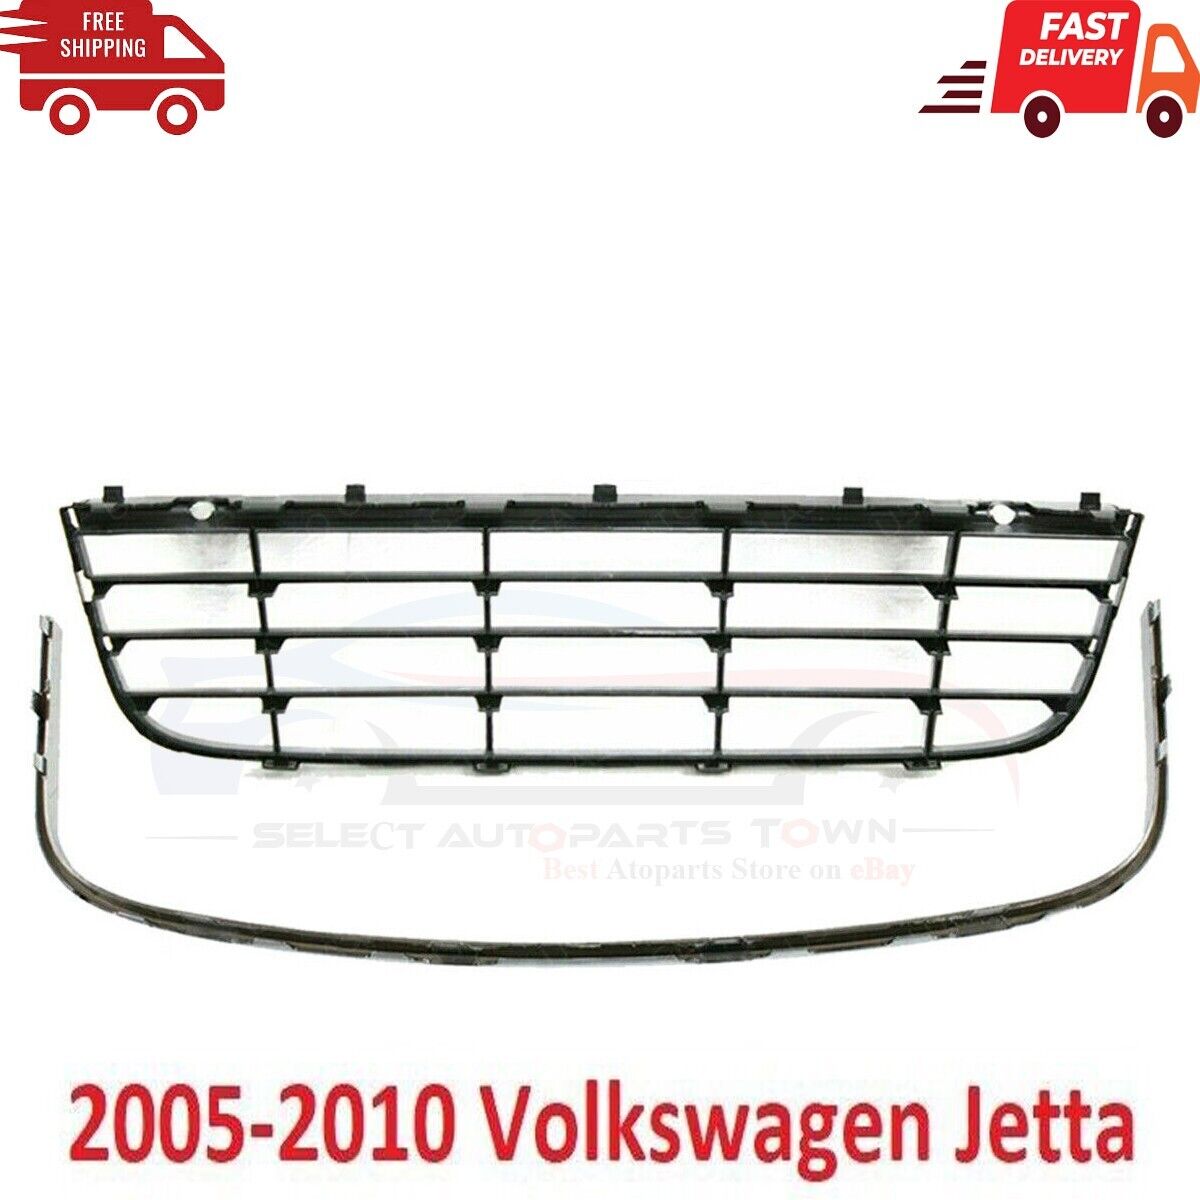 New Fits 2005-2010 Volkswagen Jetta Front Bumper Lower Grille & Chrome Trim Set